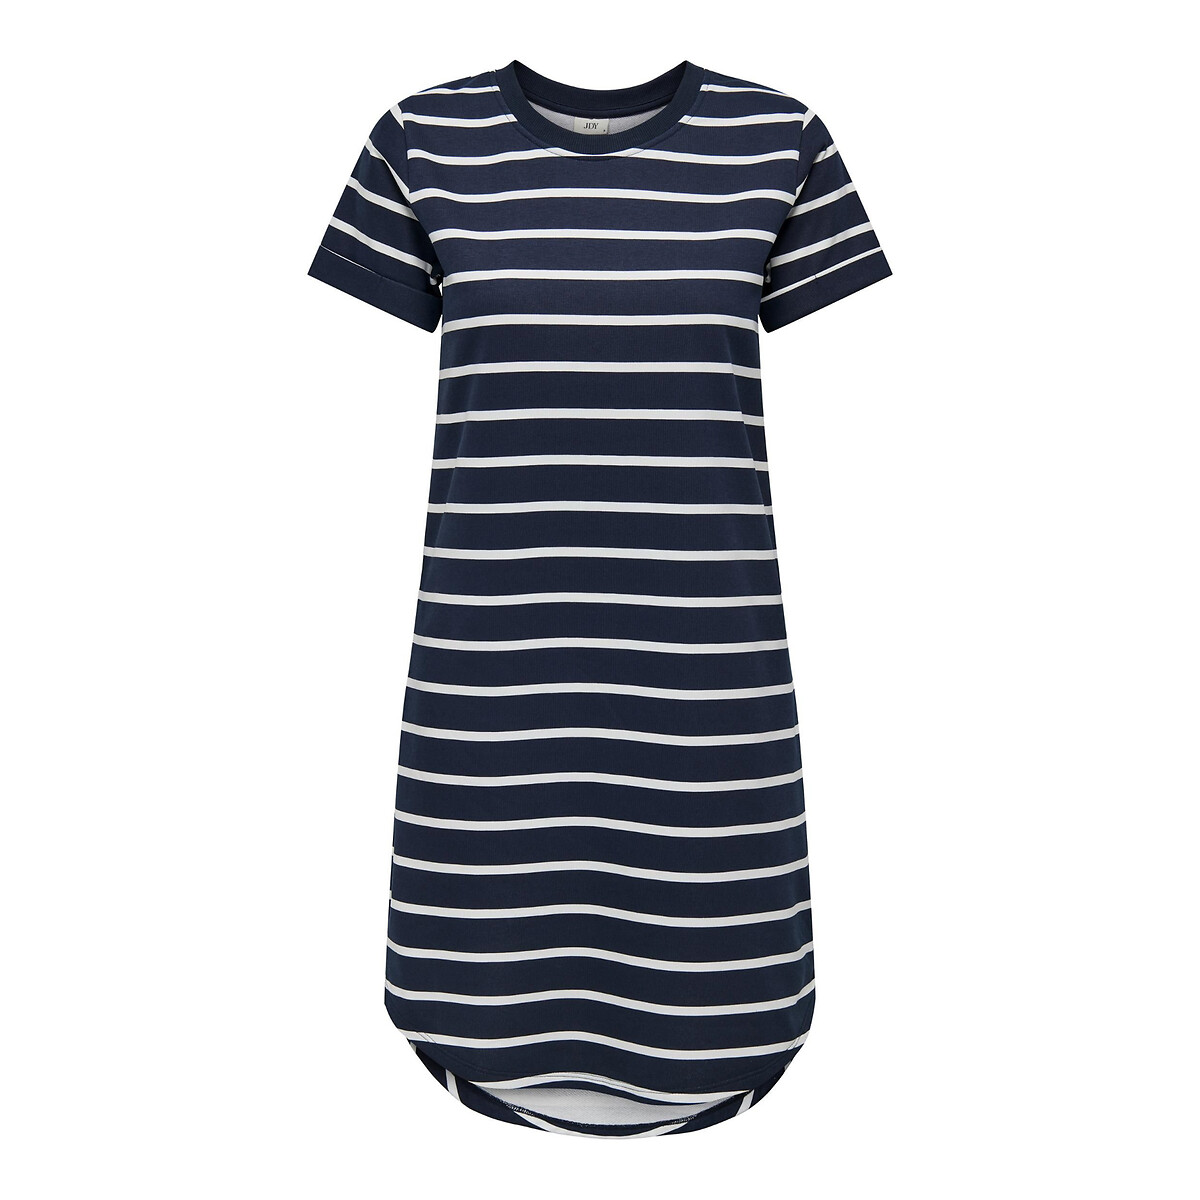 JACQUELINE de YONG Shirtkleid Kurzes T-Shirt Kleid Knielang Gestreift JDYIVY (knielang) 4989 in Weiß-Blau